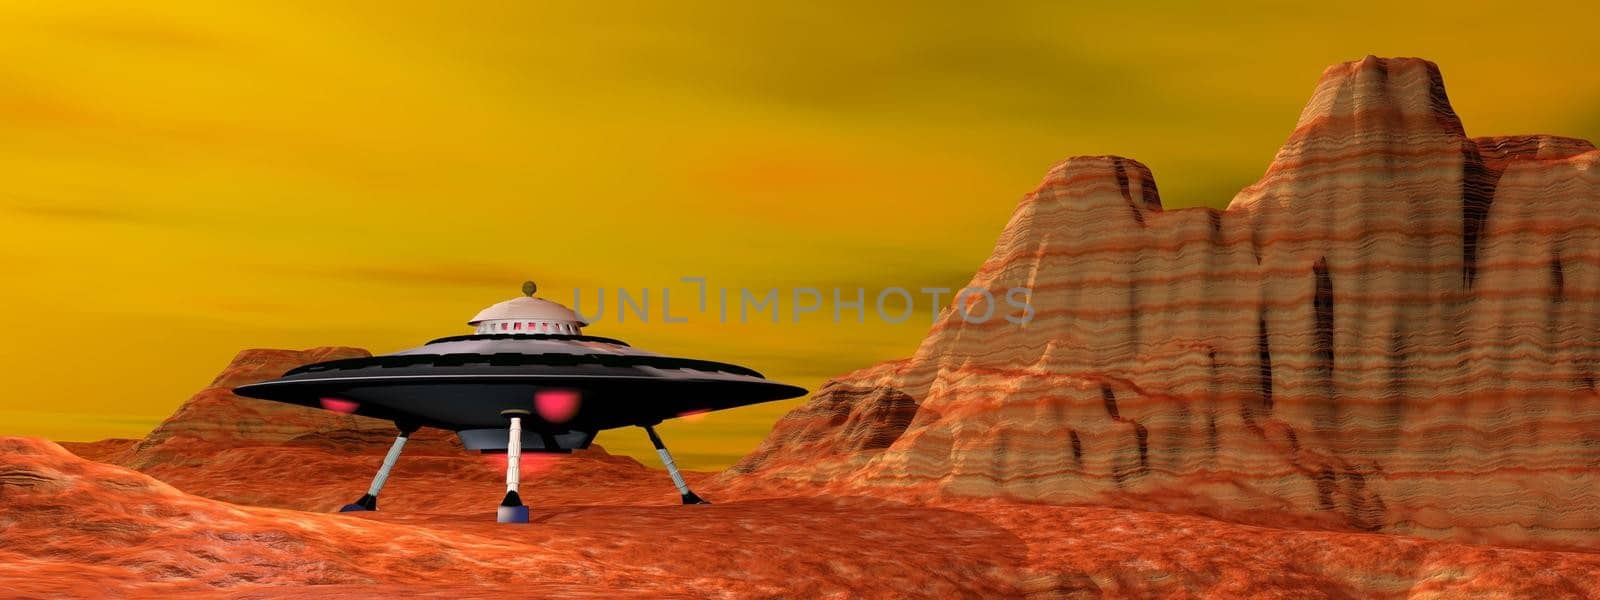 UFO with lights landed in desert landscape by sunset